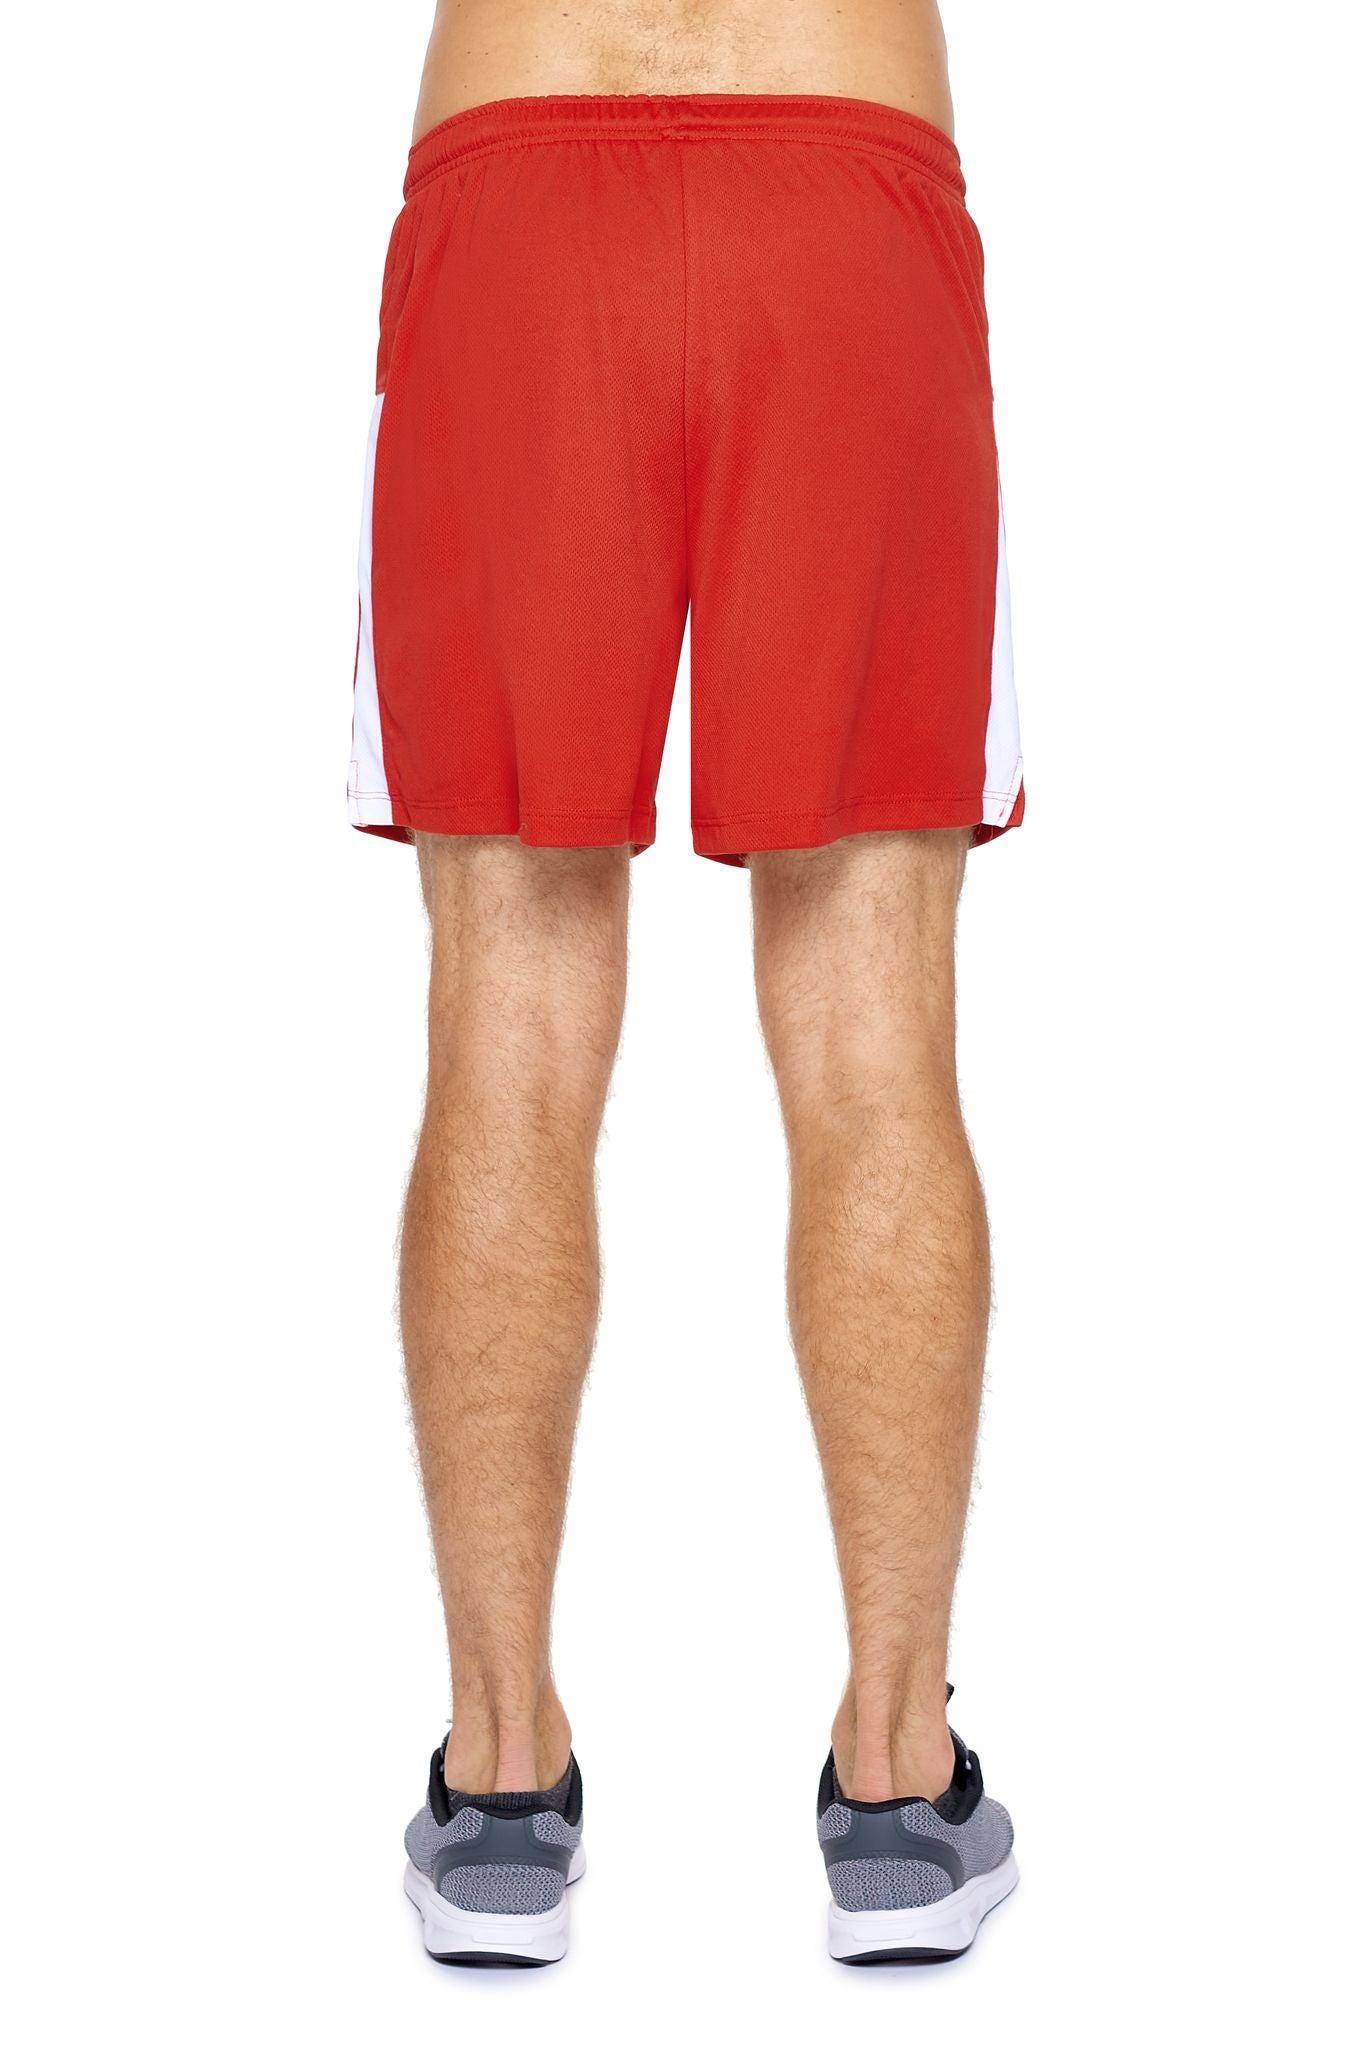 AJ1090🇺🇸 Oxymesh™ Premium Shorts - Expert Brand #true-red